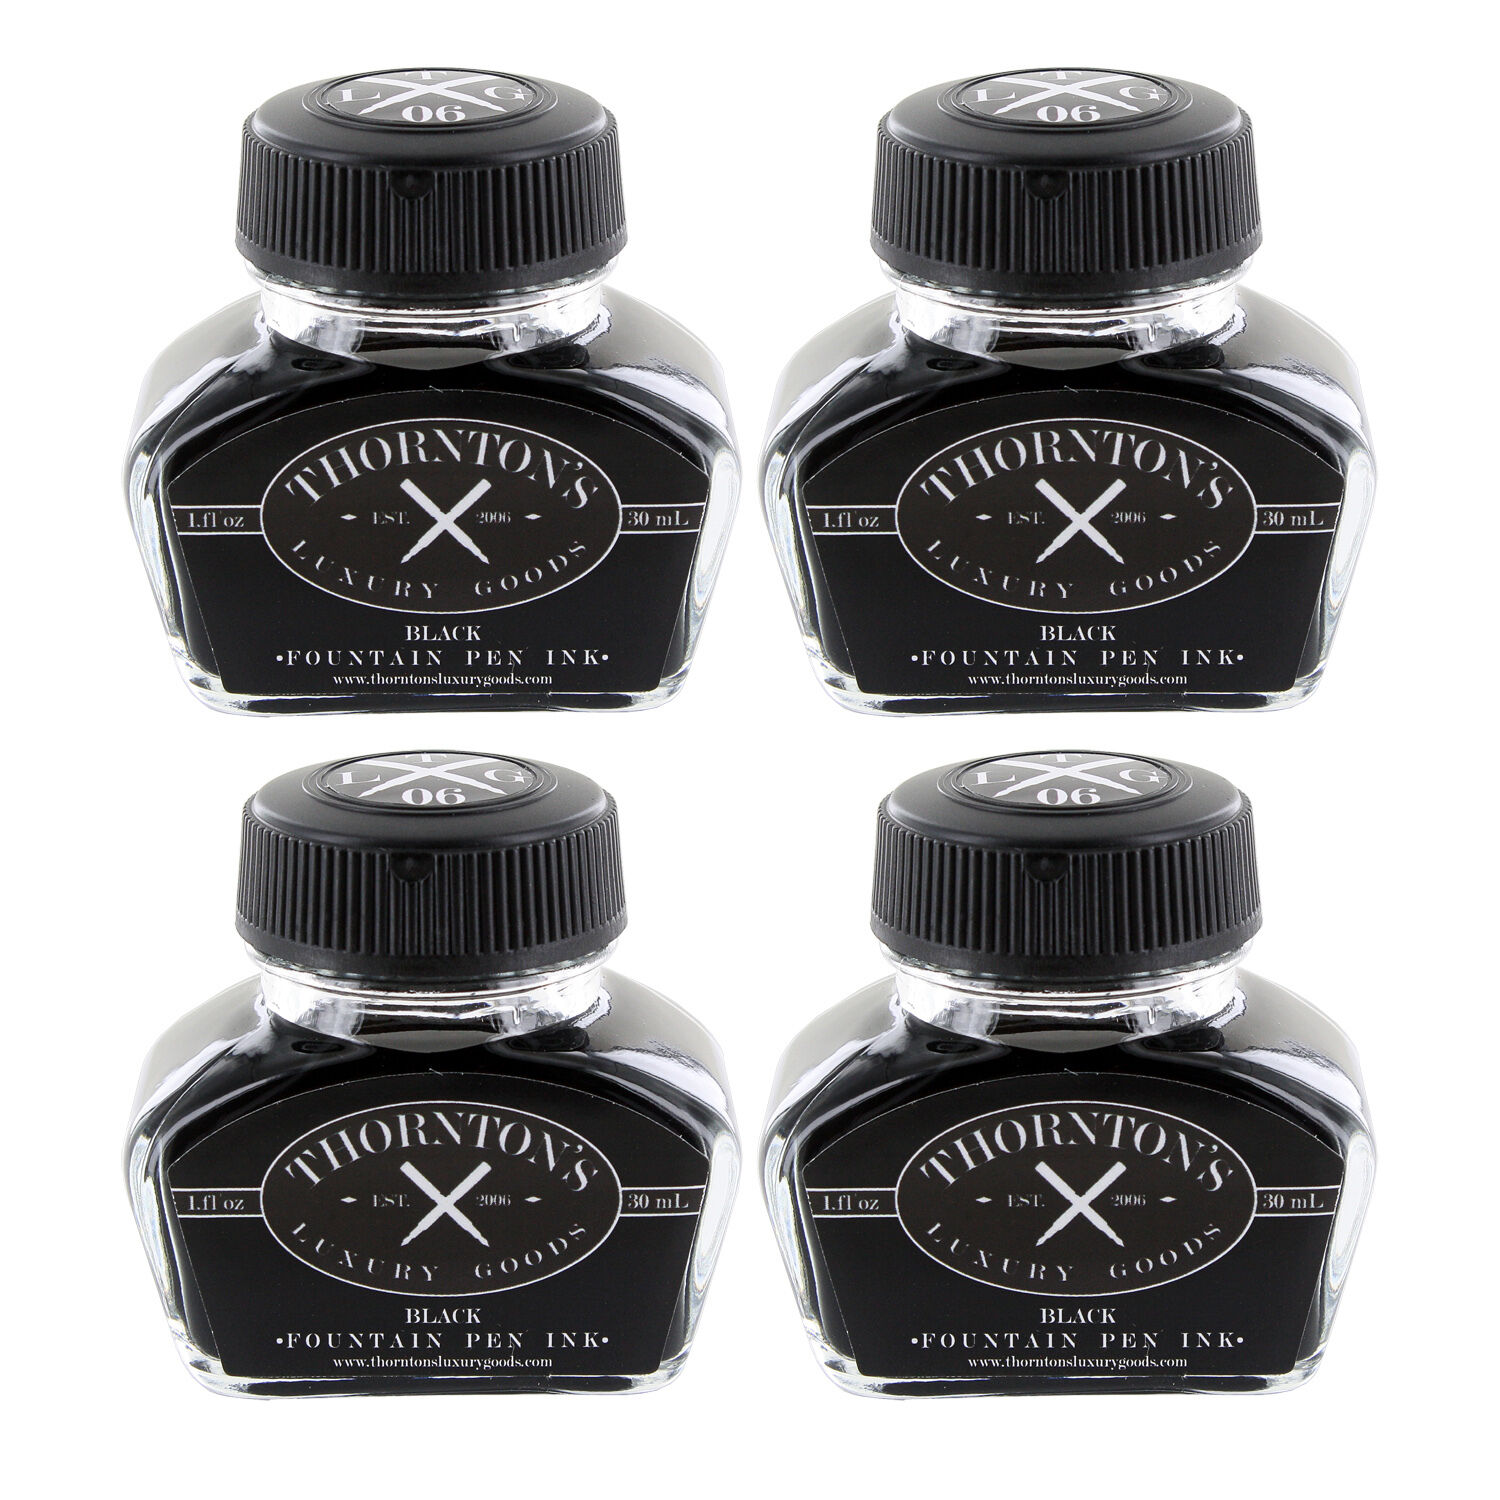 Thornton's Luxury Goods Fountain Pen Ink Bottle, 30ml - Black - Set of 4